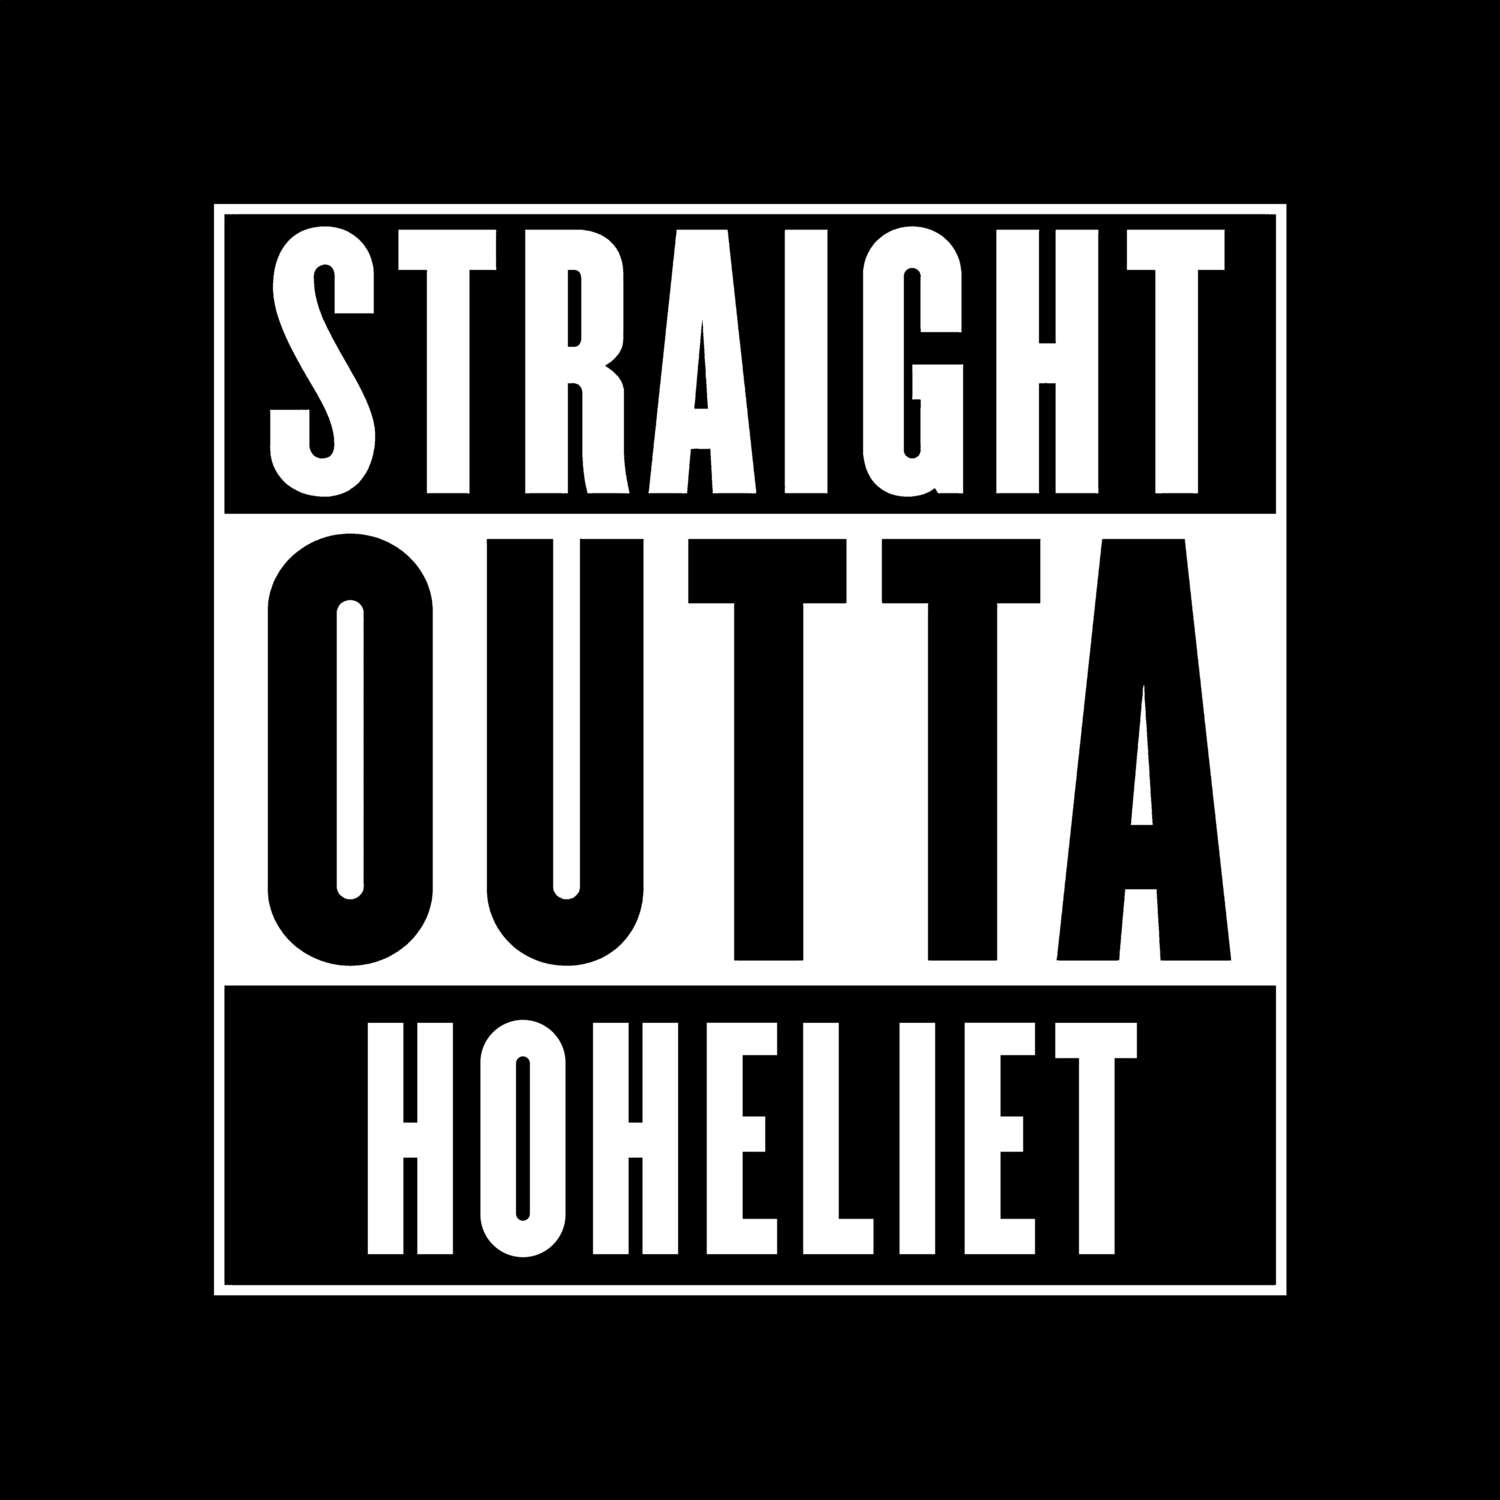 Hoheliet T-Shirt »Straight Outta«